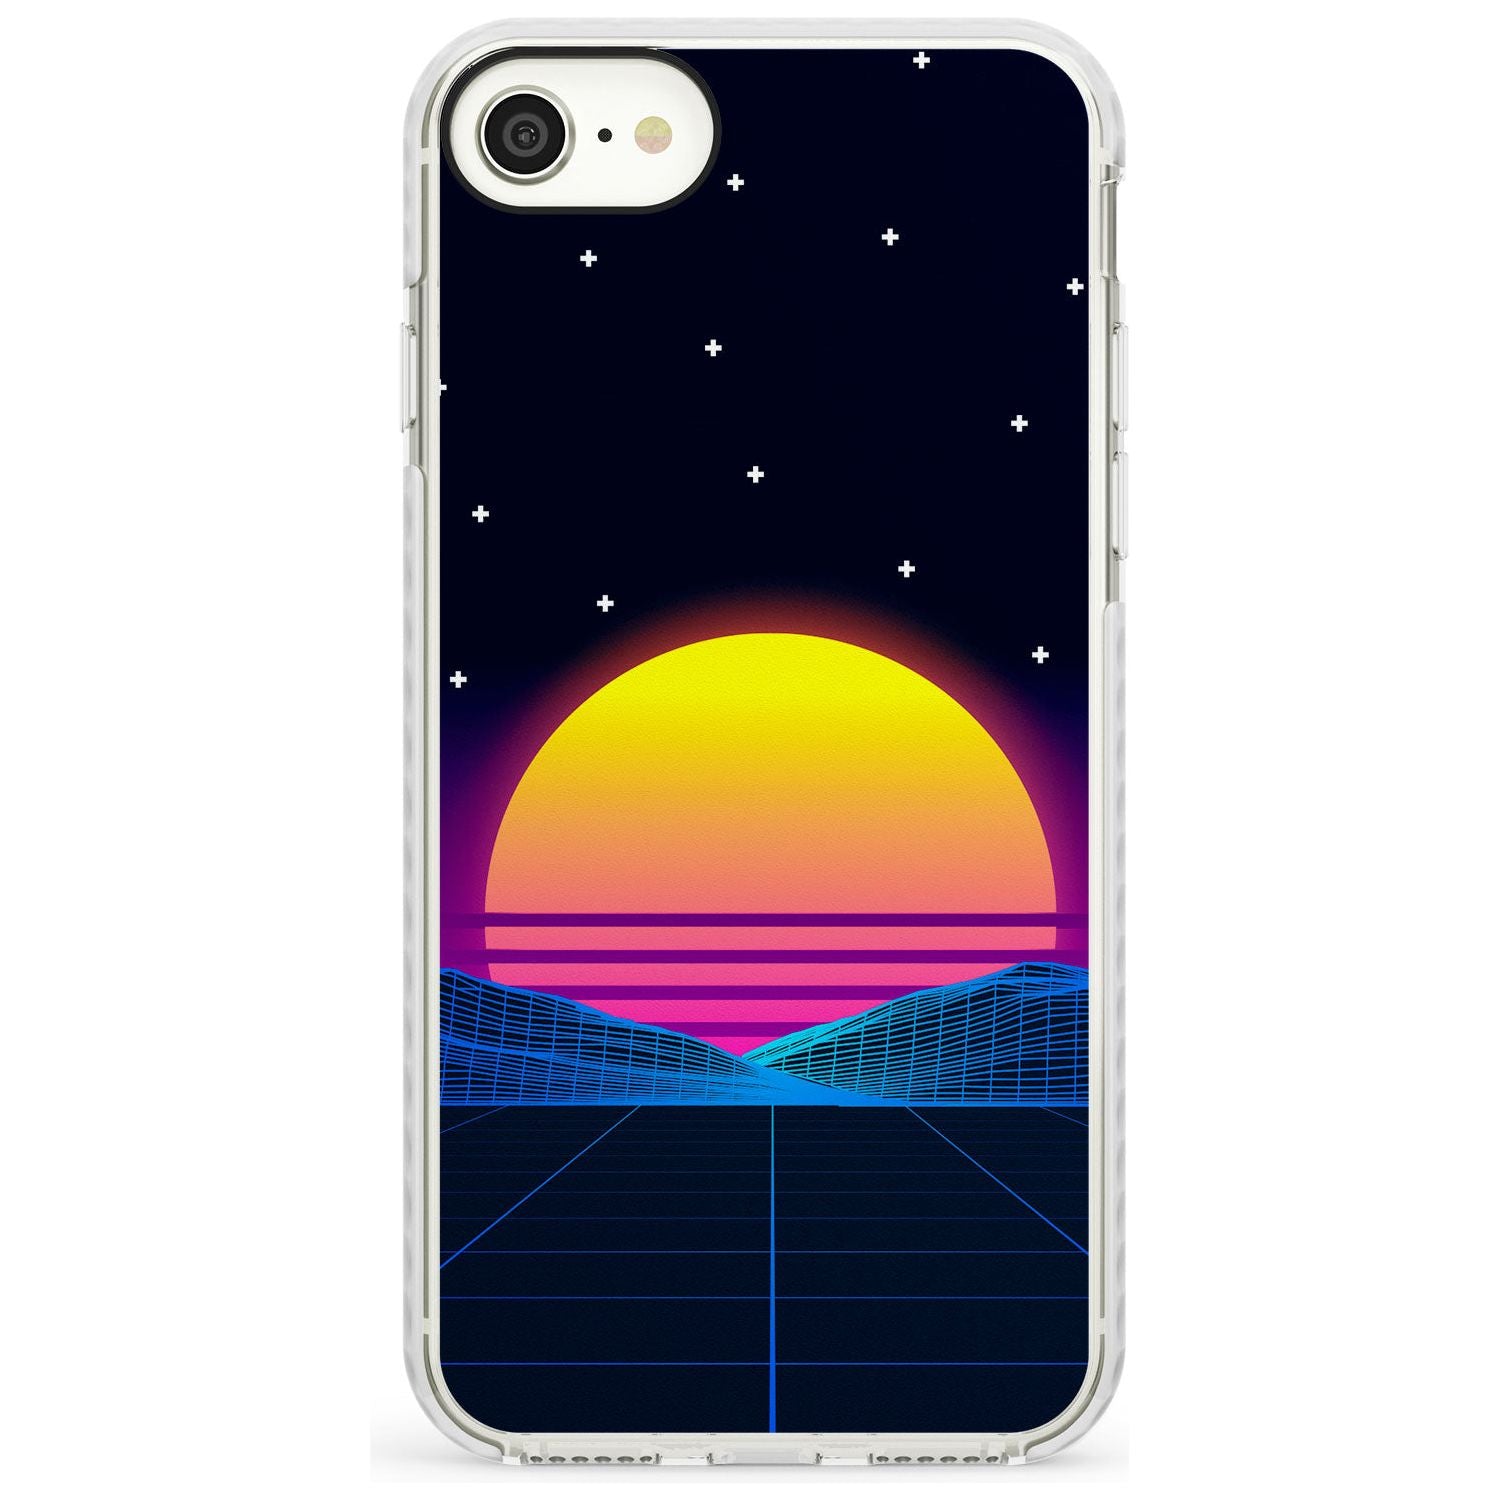 Retro Sunset Vaporwave Impact Phone Case for iPhone SE 8 7 Plus